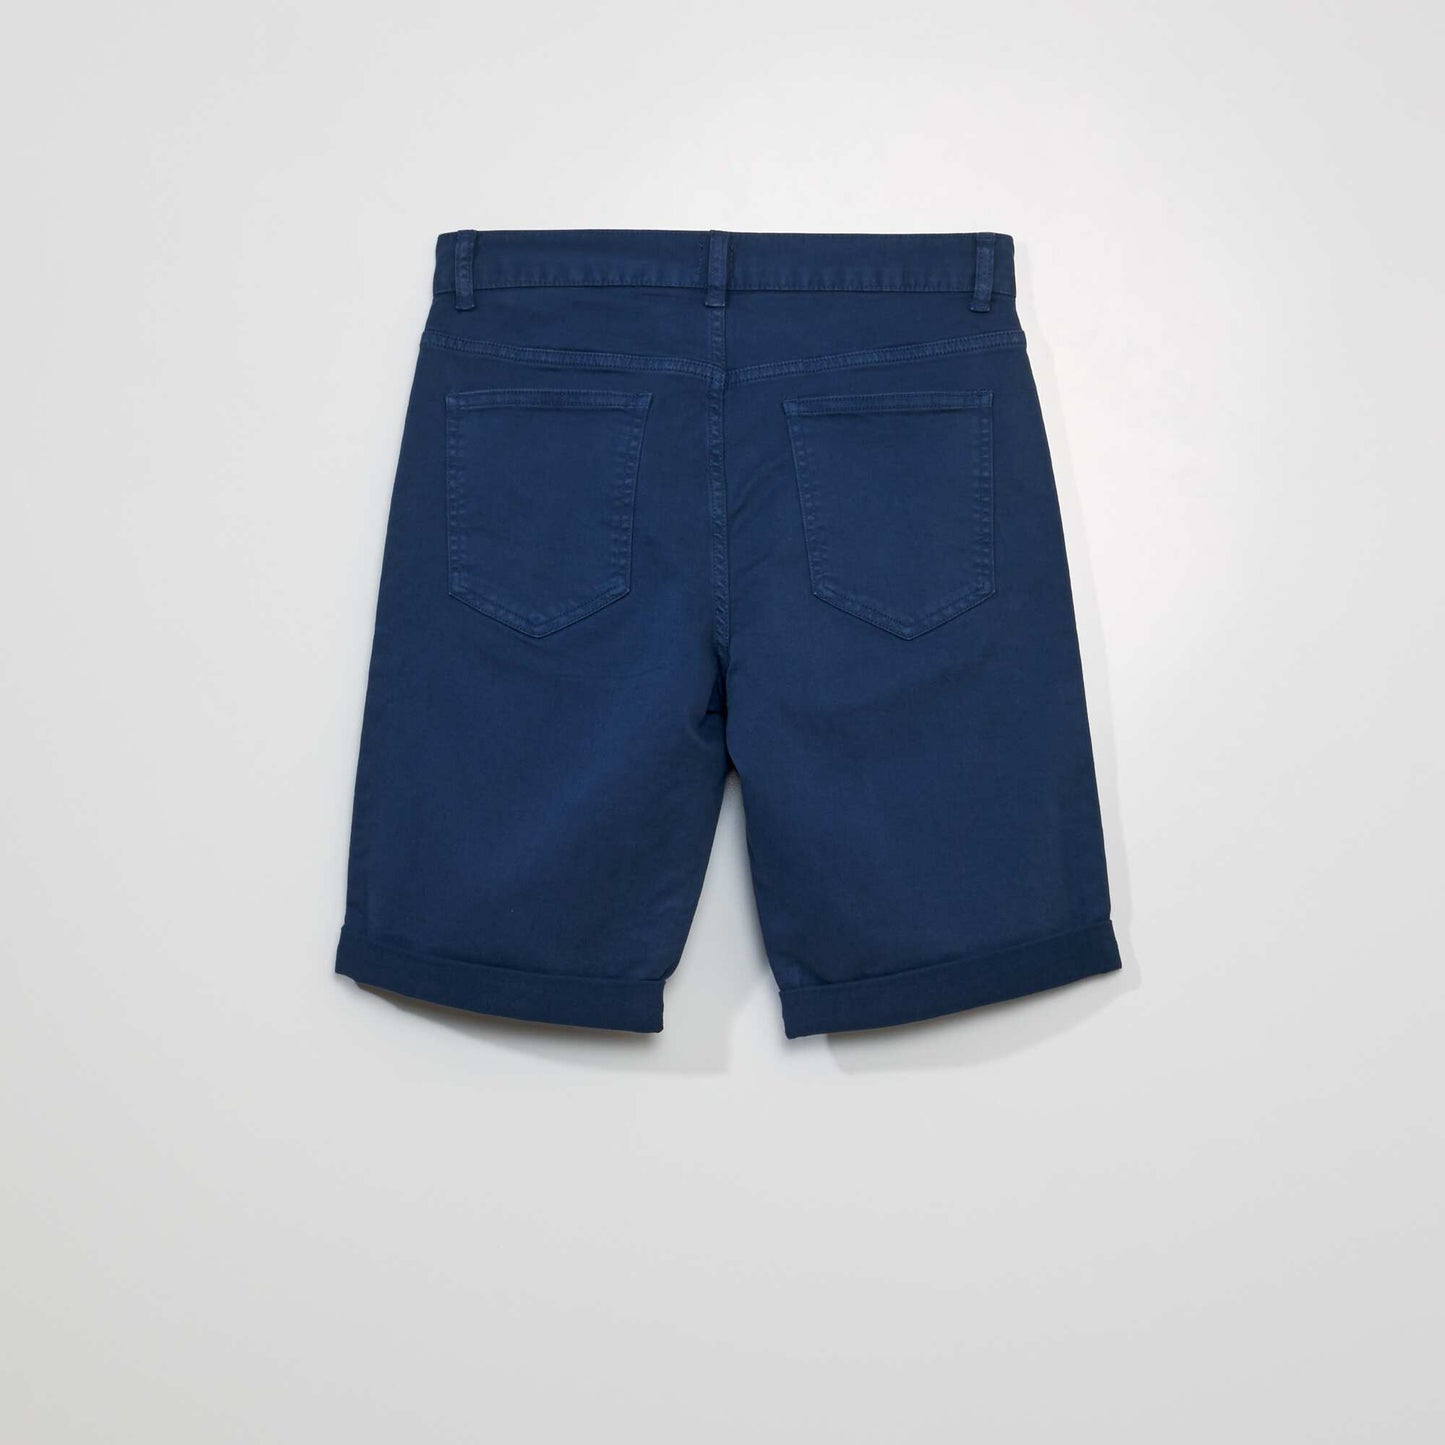 Chino Bermuda shorts with 5 pockets BLUE